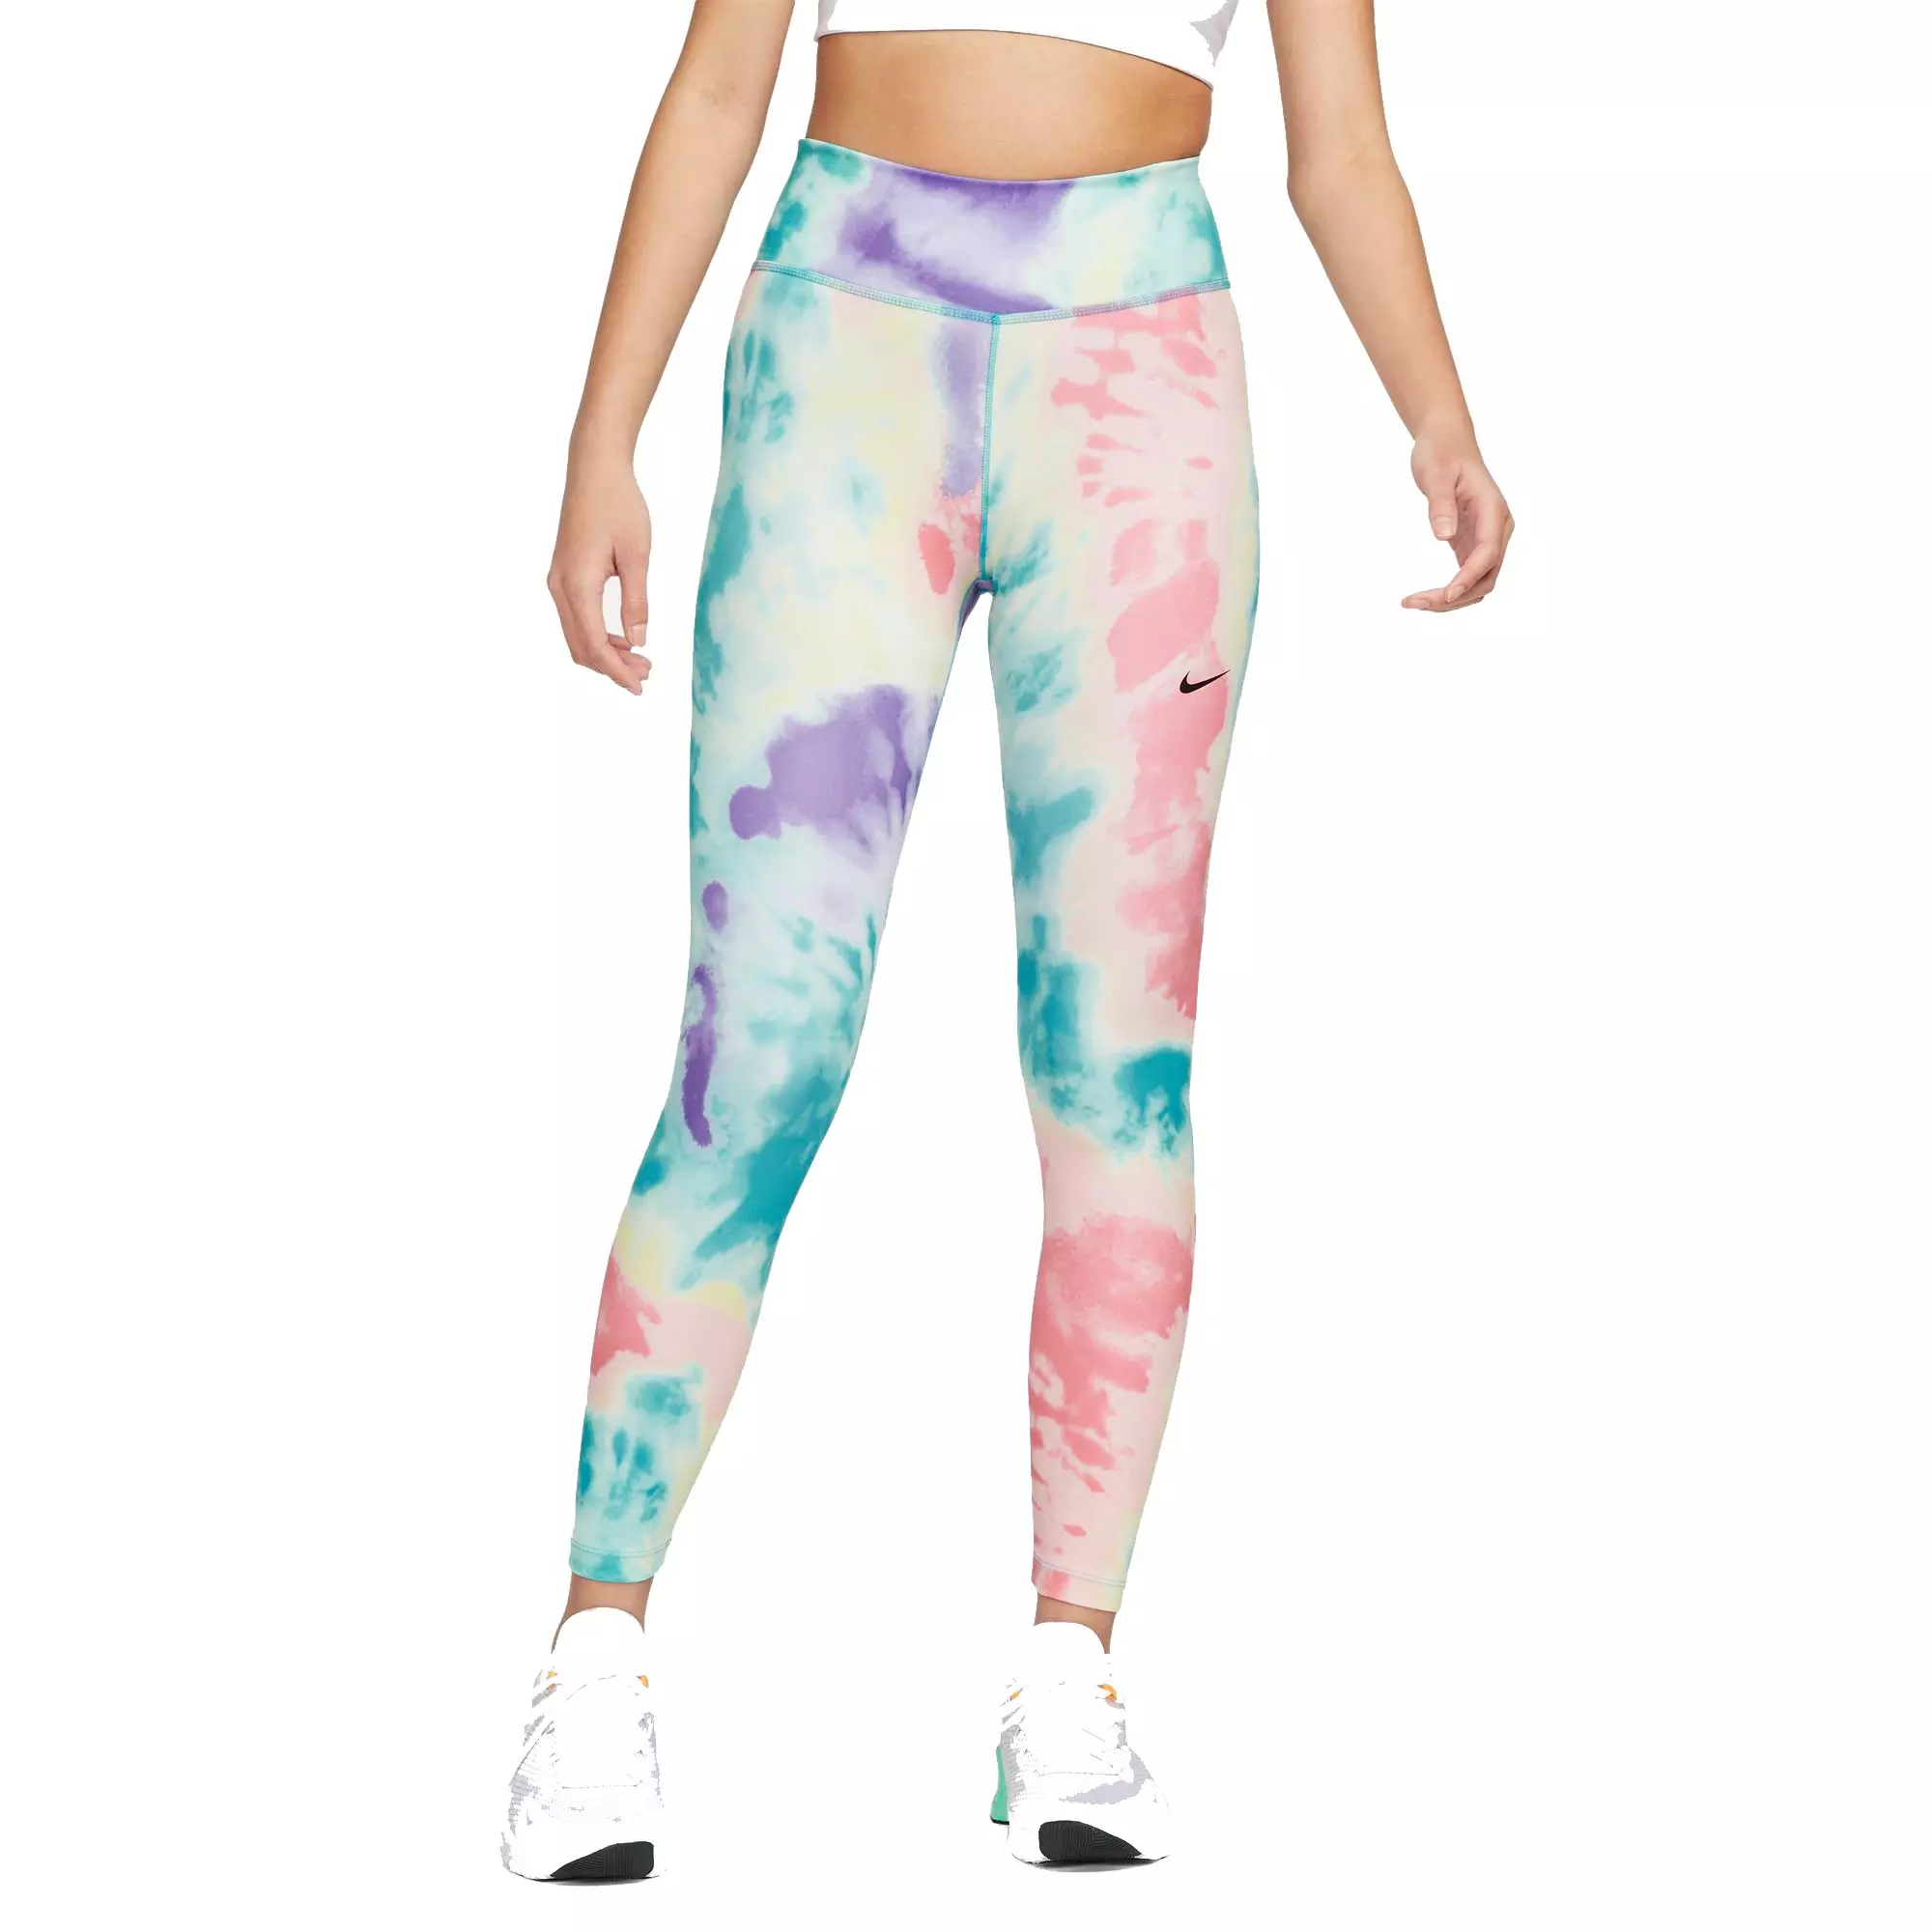 Nike Yoga Gradient-Dye High Rise 7/8 Leggings Small - $30 - From Ridley